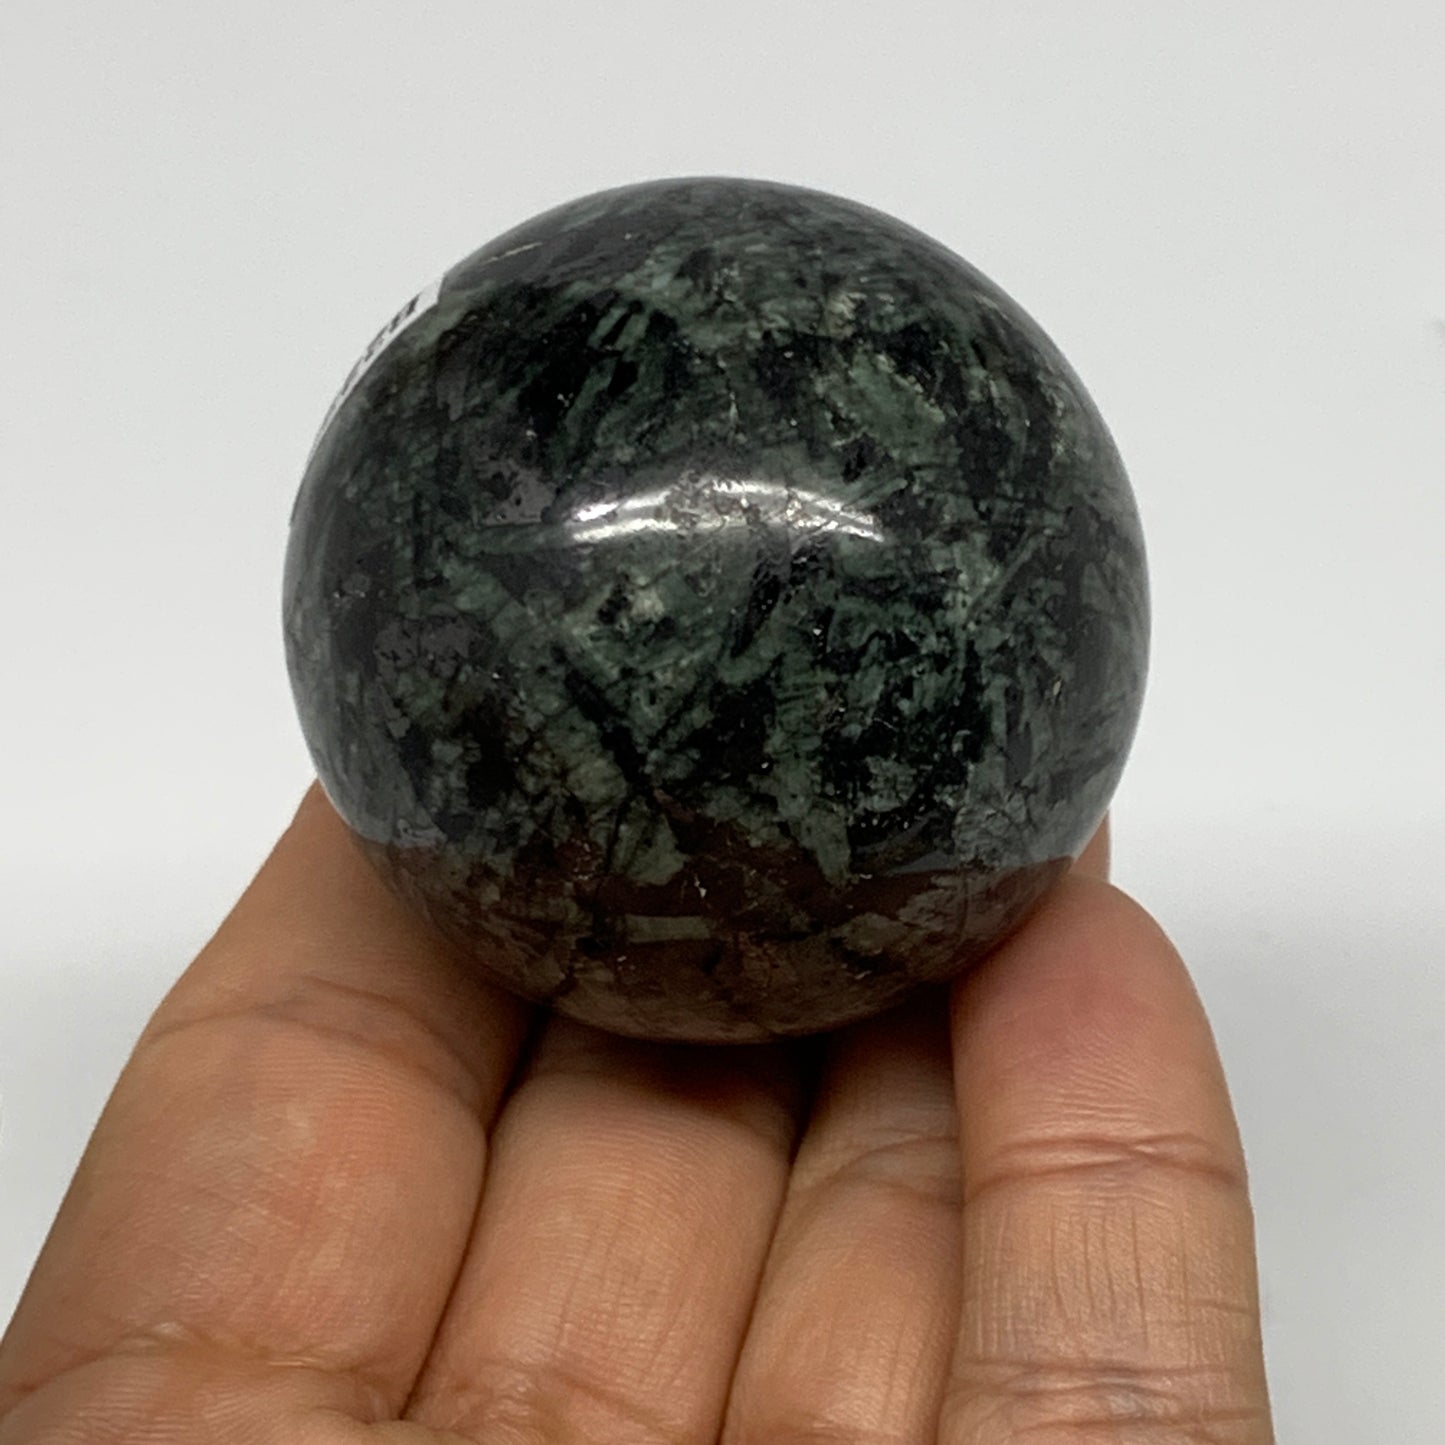 157.3g, 1.8"(46mm), Crocodile Kambaba Jasper Sphere Ball @Madagascar,B22204